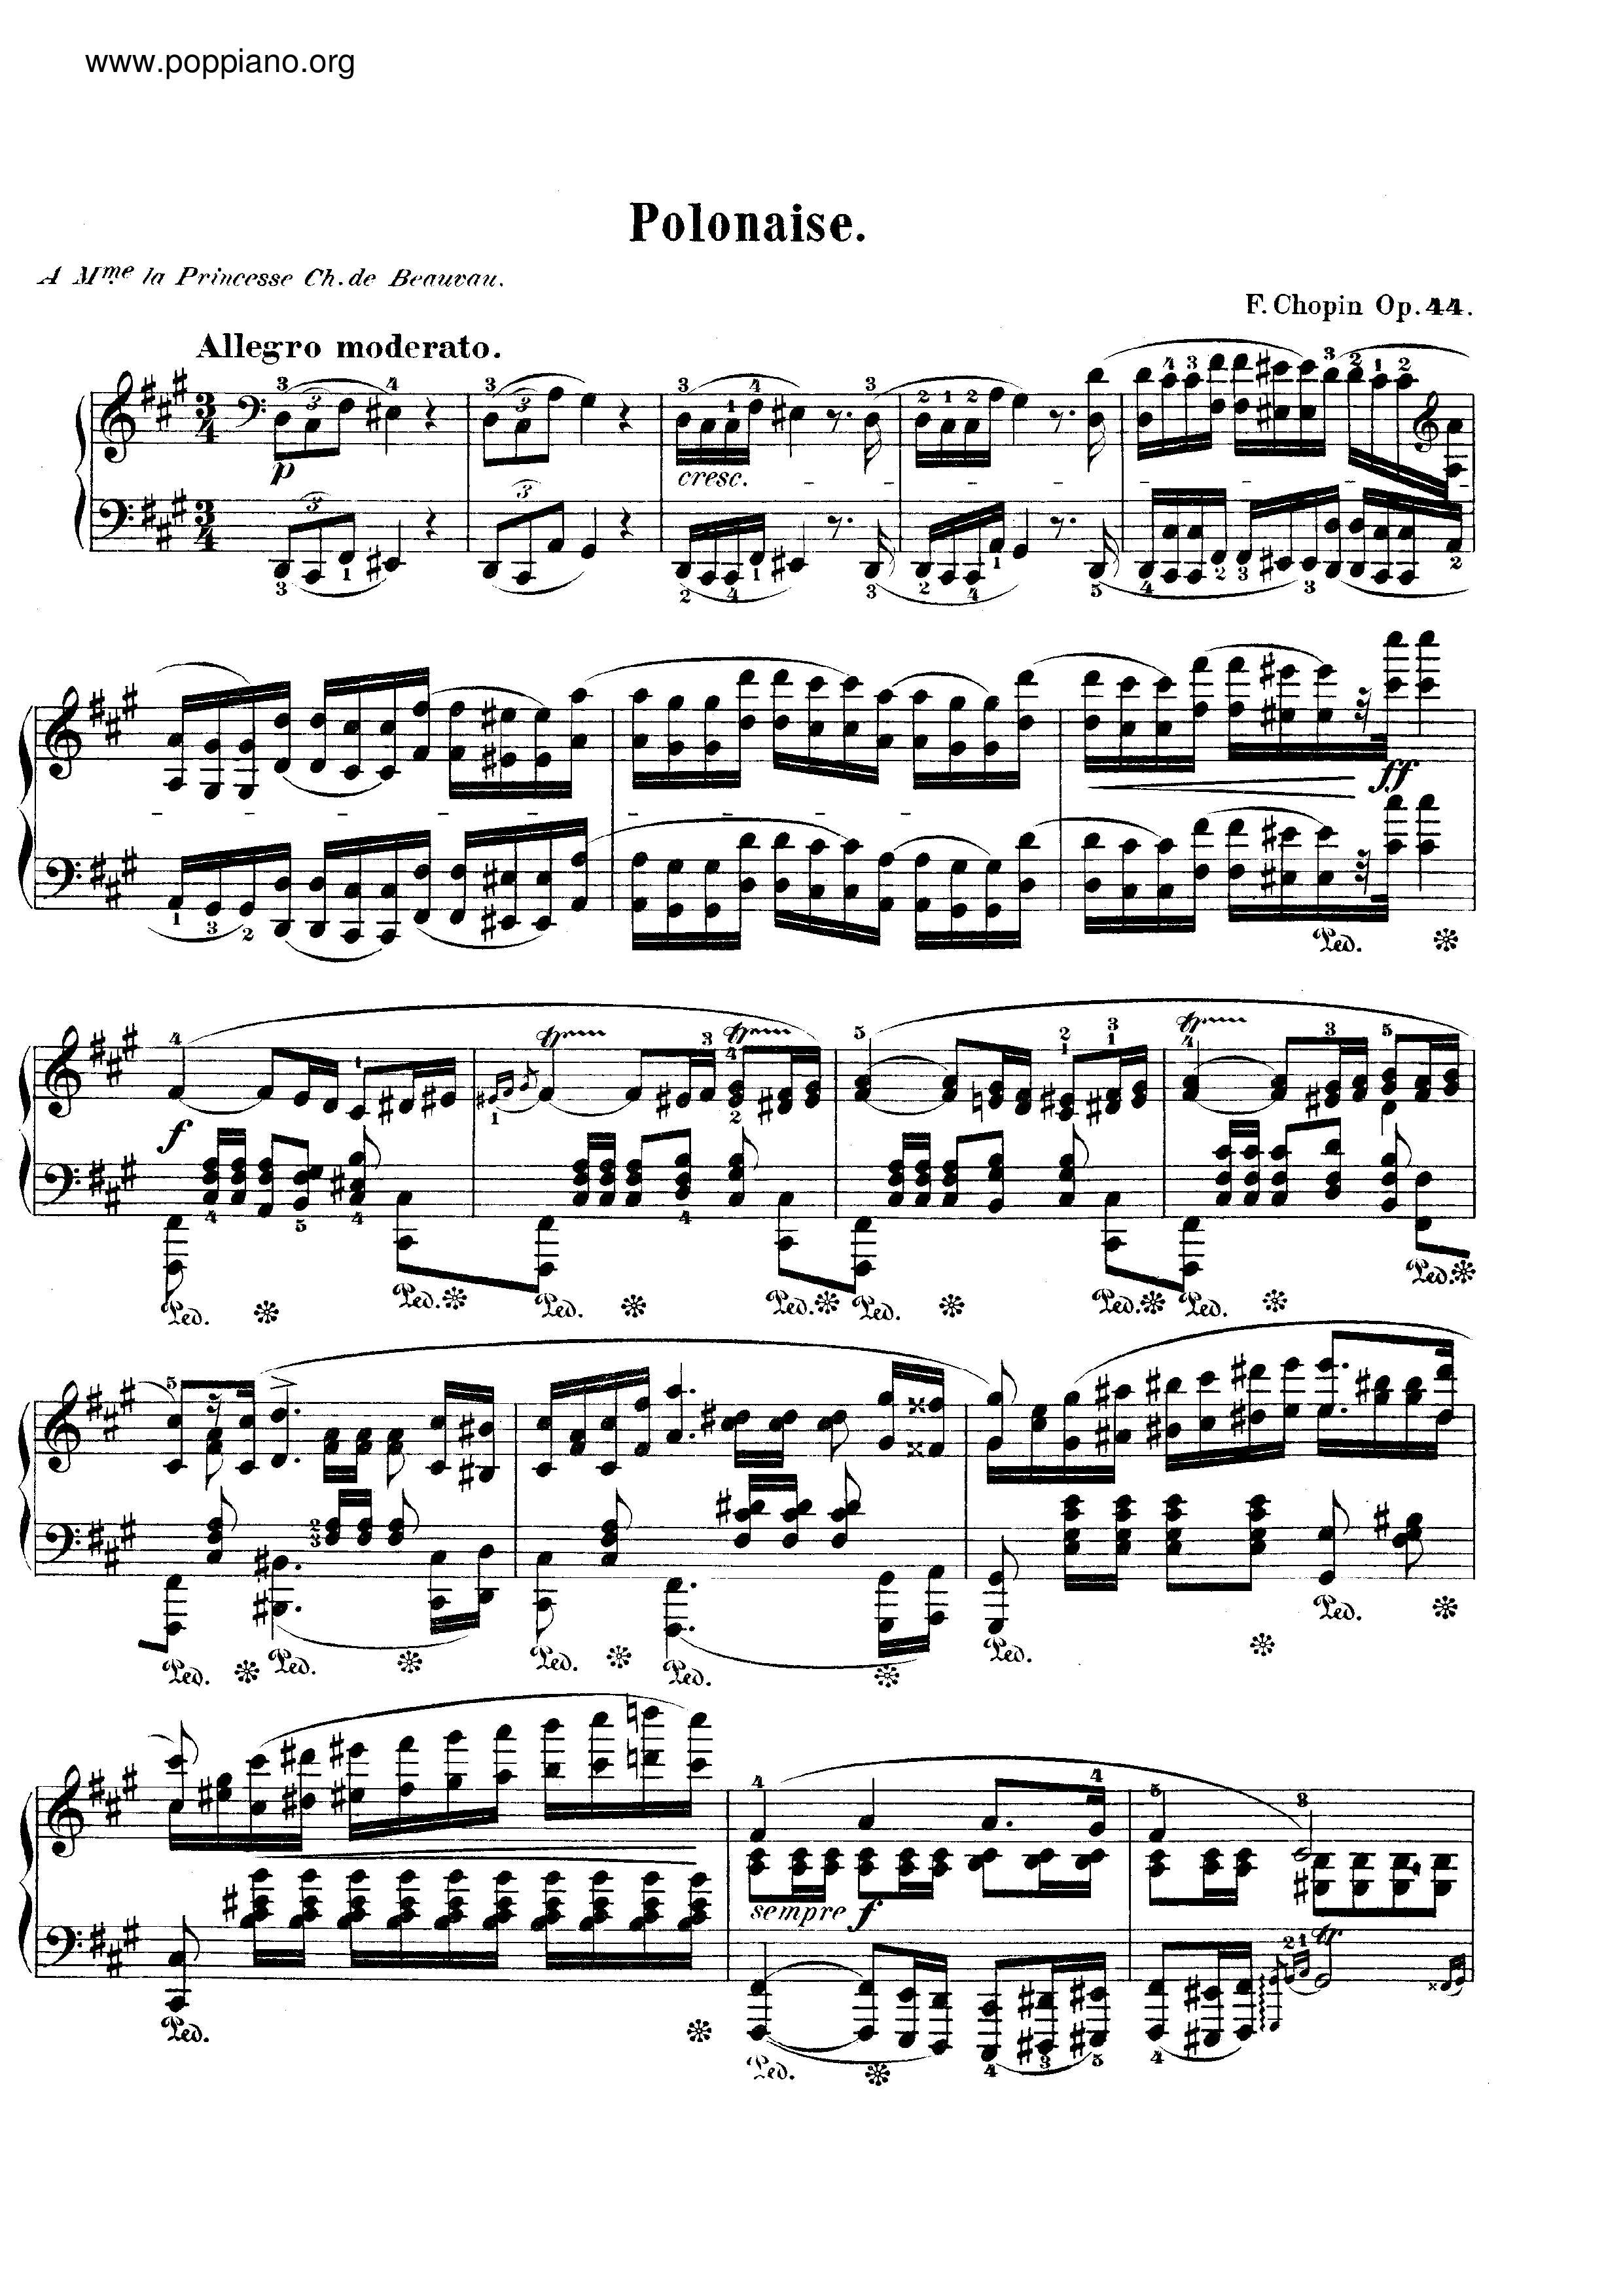 Polonaise in f sharp minor, Op. 44琴谱